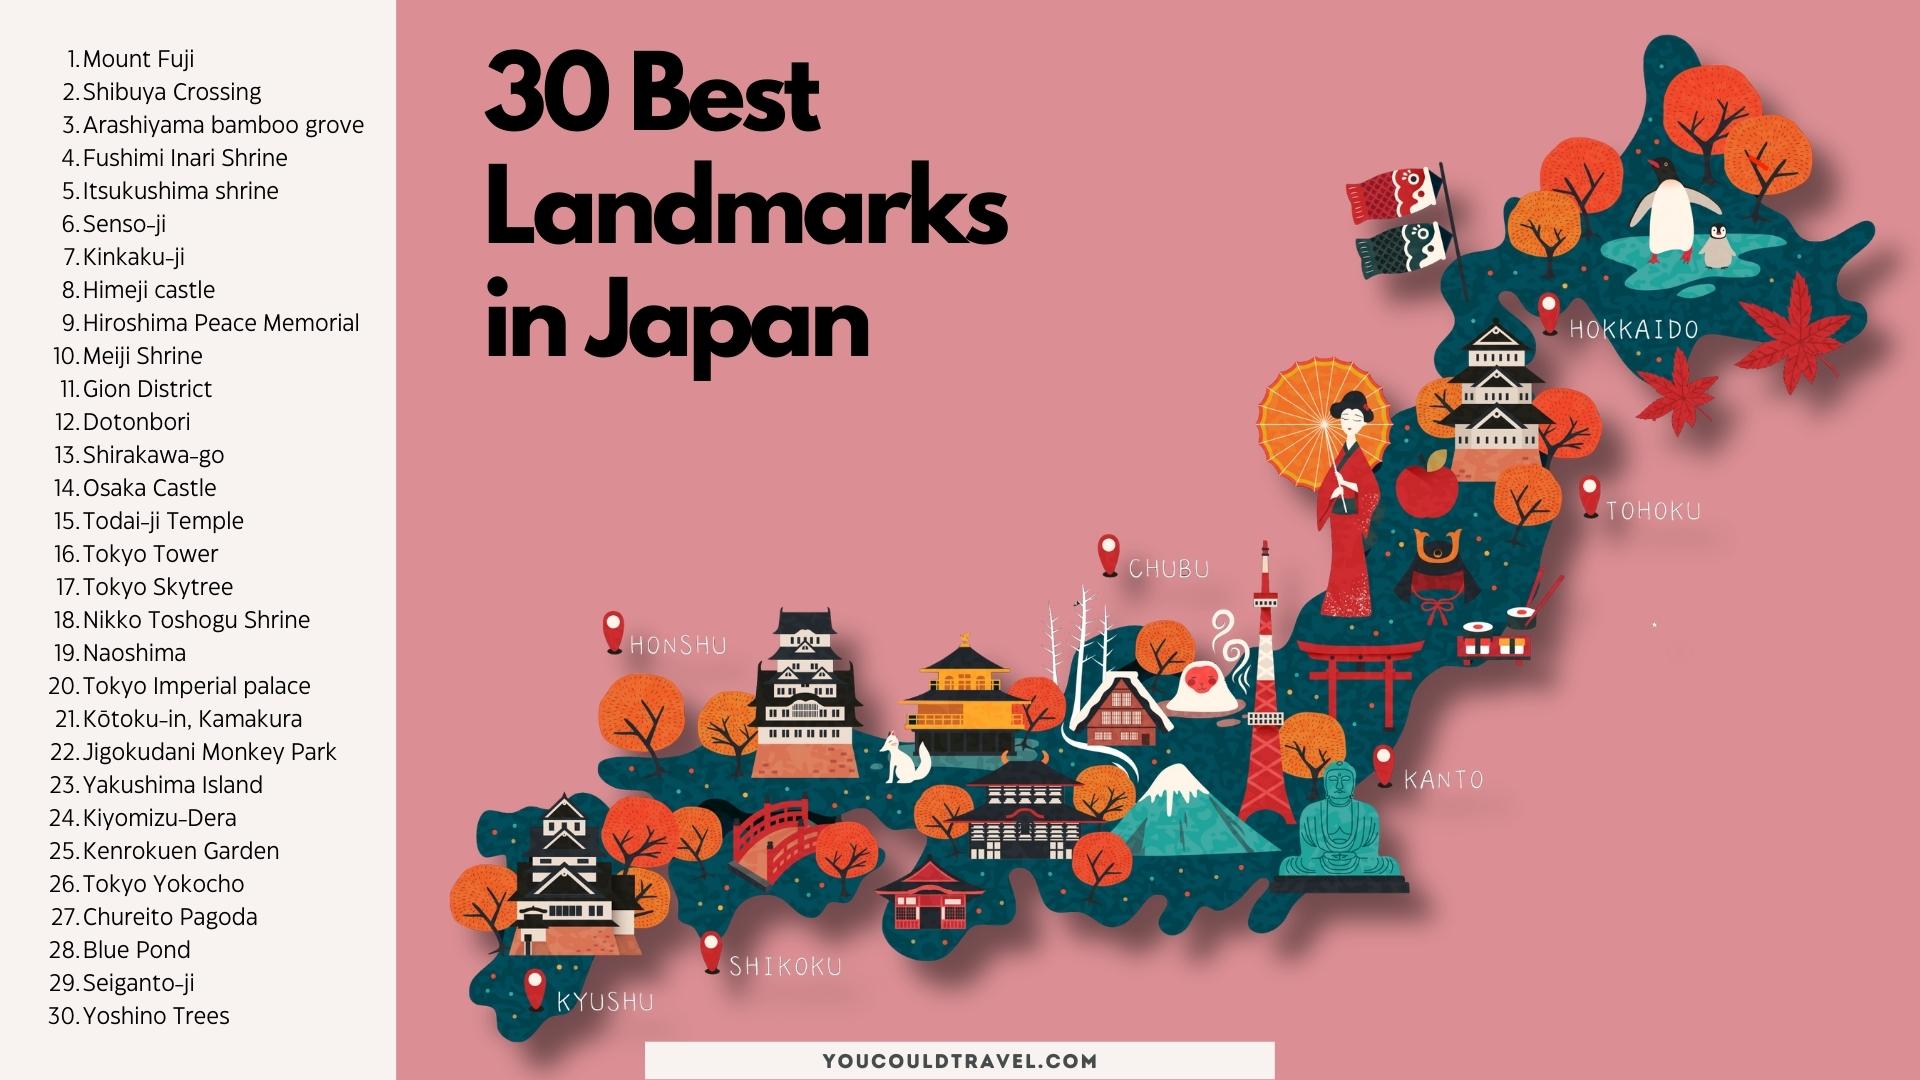 Best landmarks in Japan